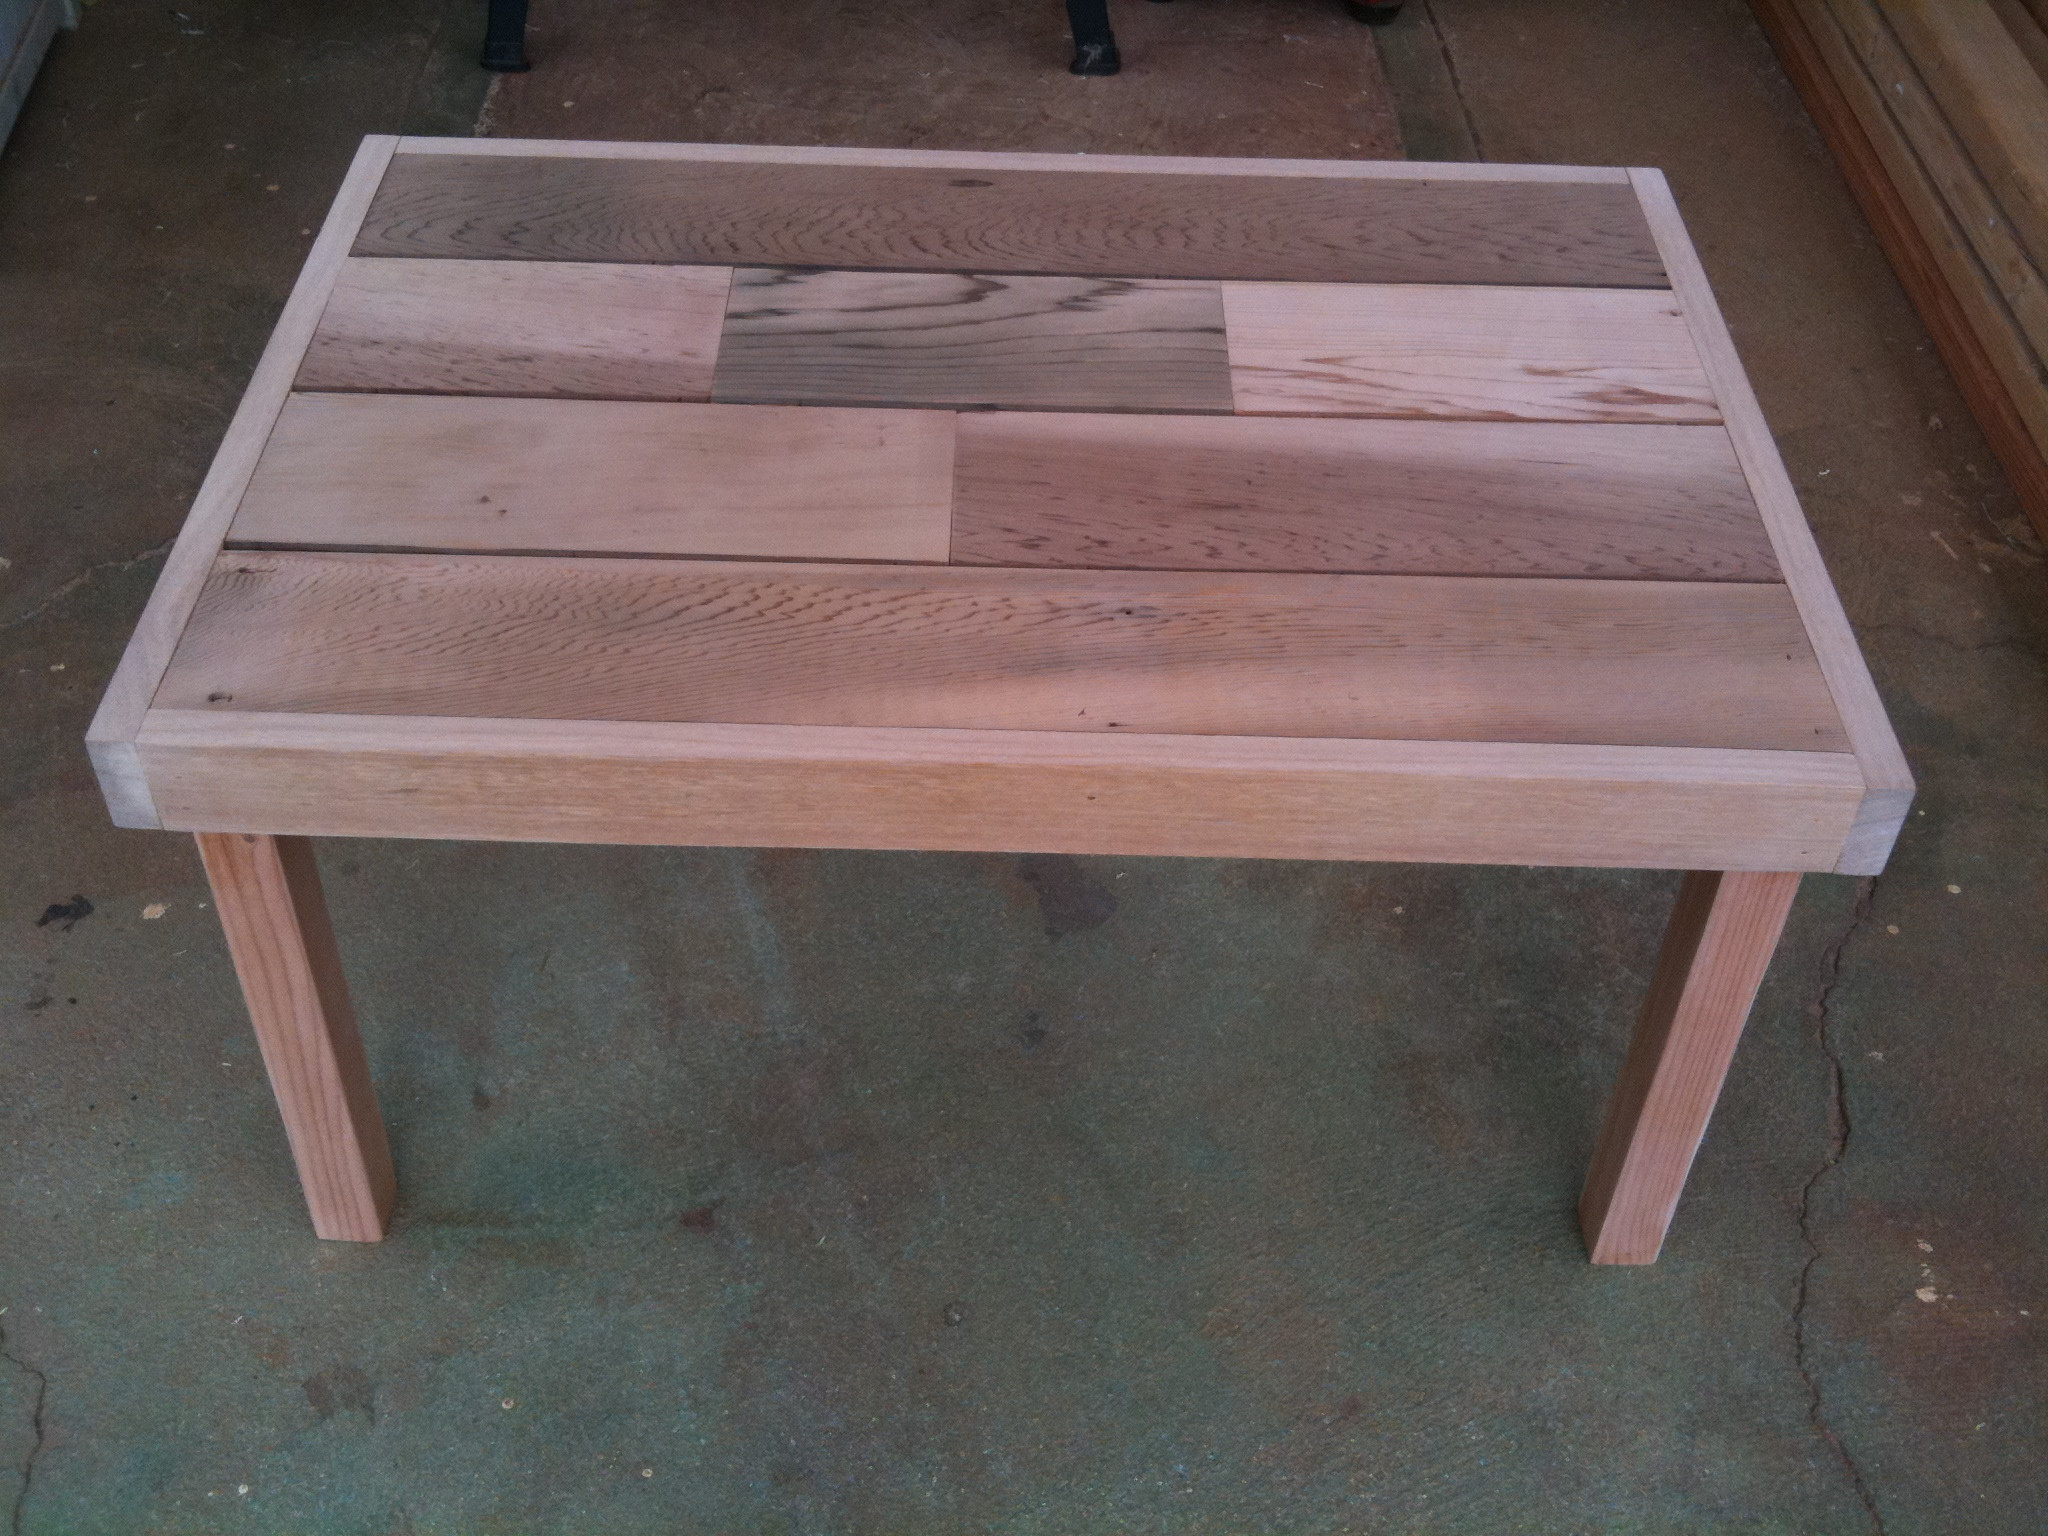 Reclaimed Wood Table DIY
 Ana White